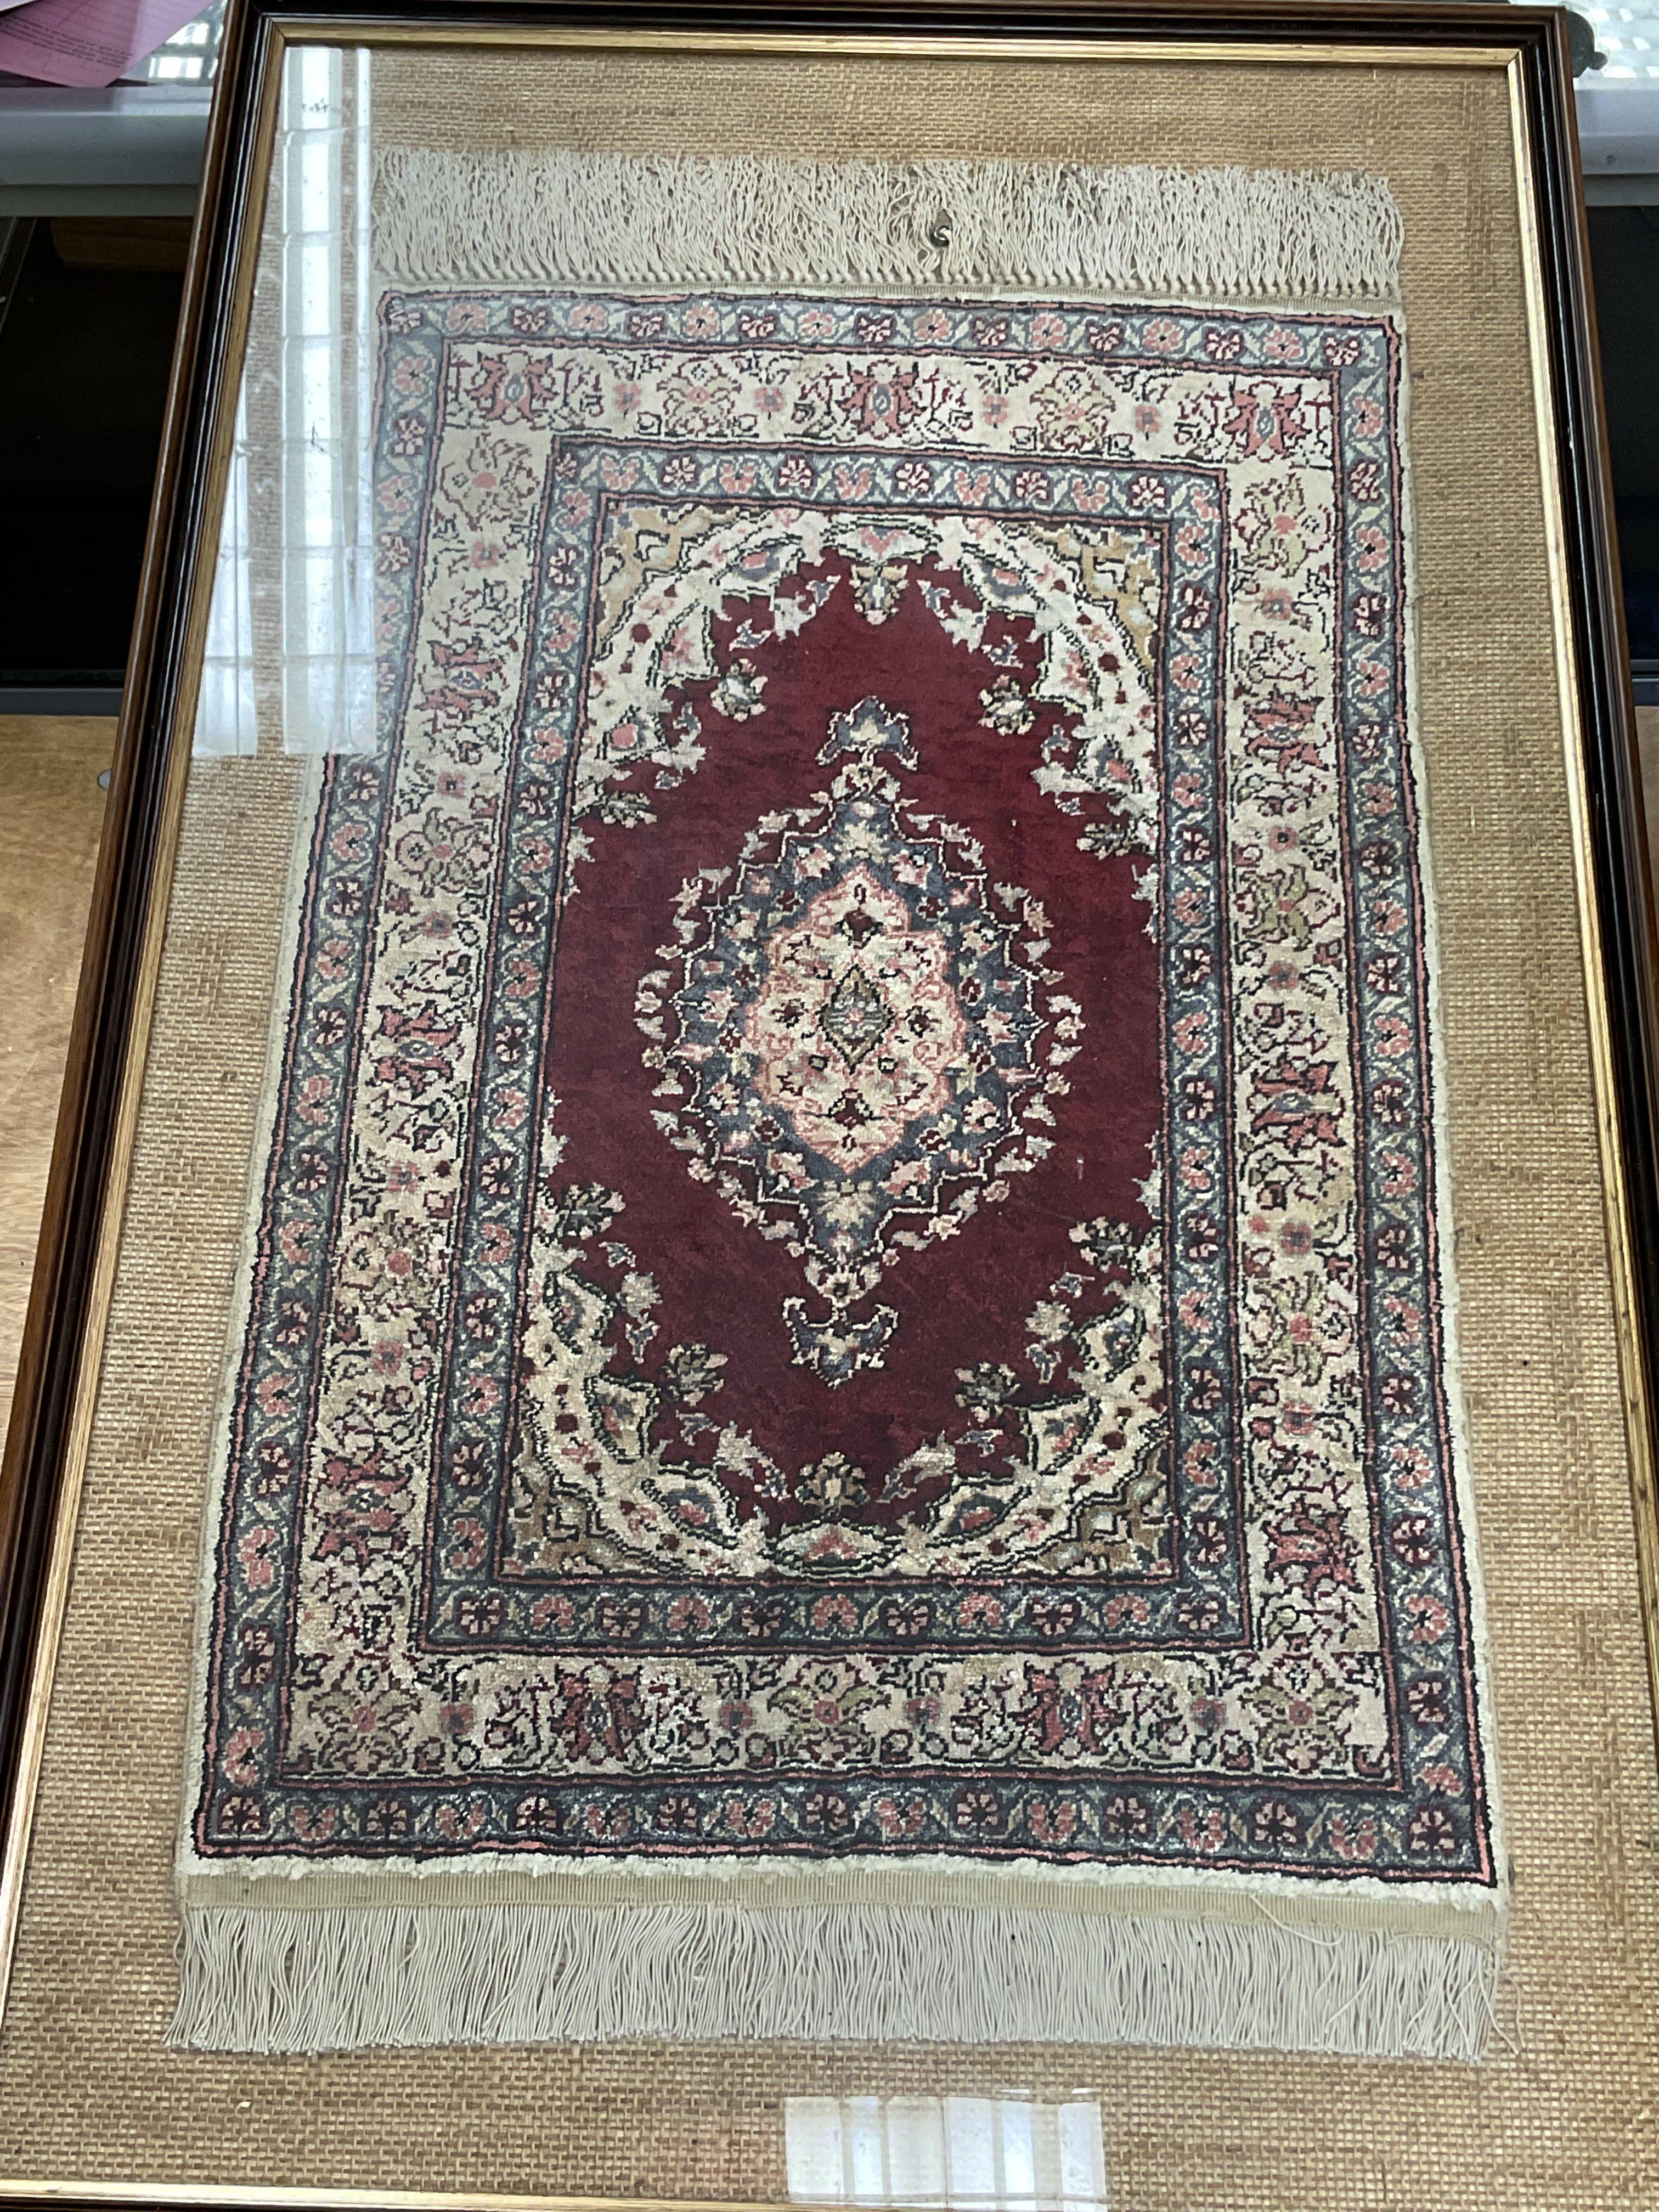 A framed silk rug measuring approximately 58.5cm x